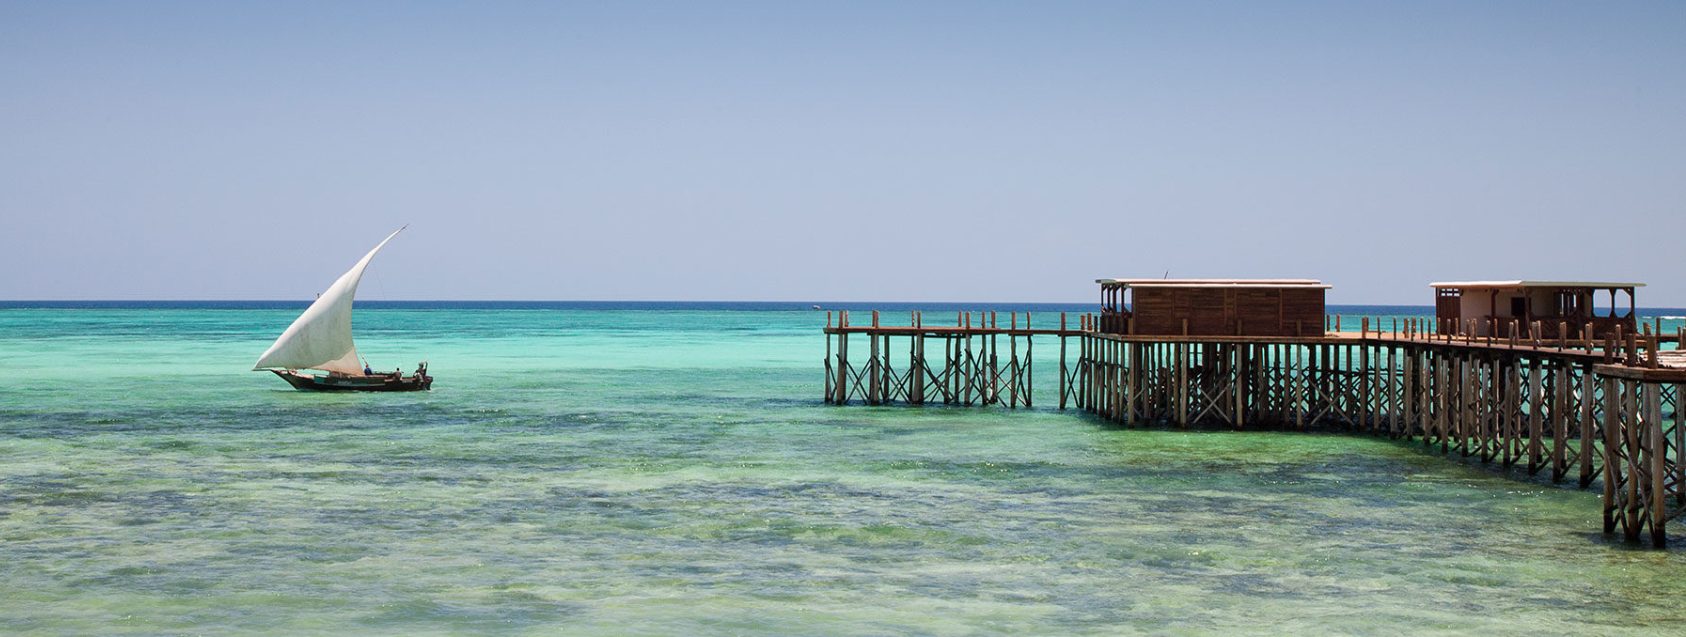 6 jours de visite de la plage de Zanzibar